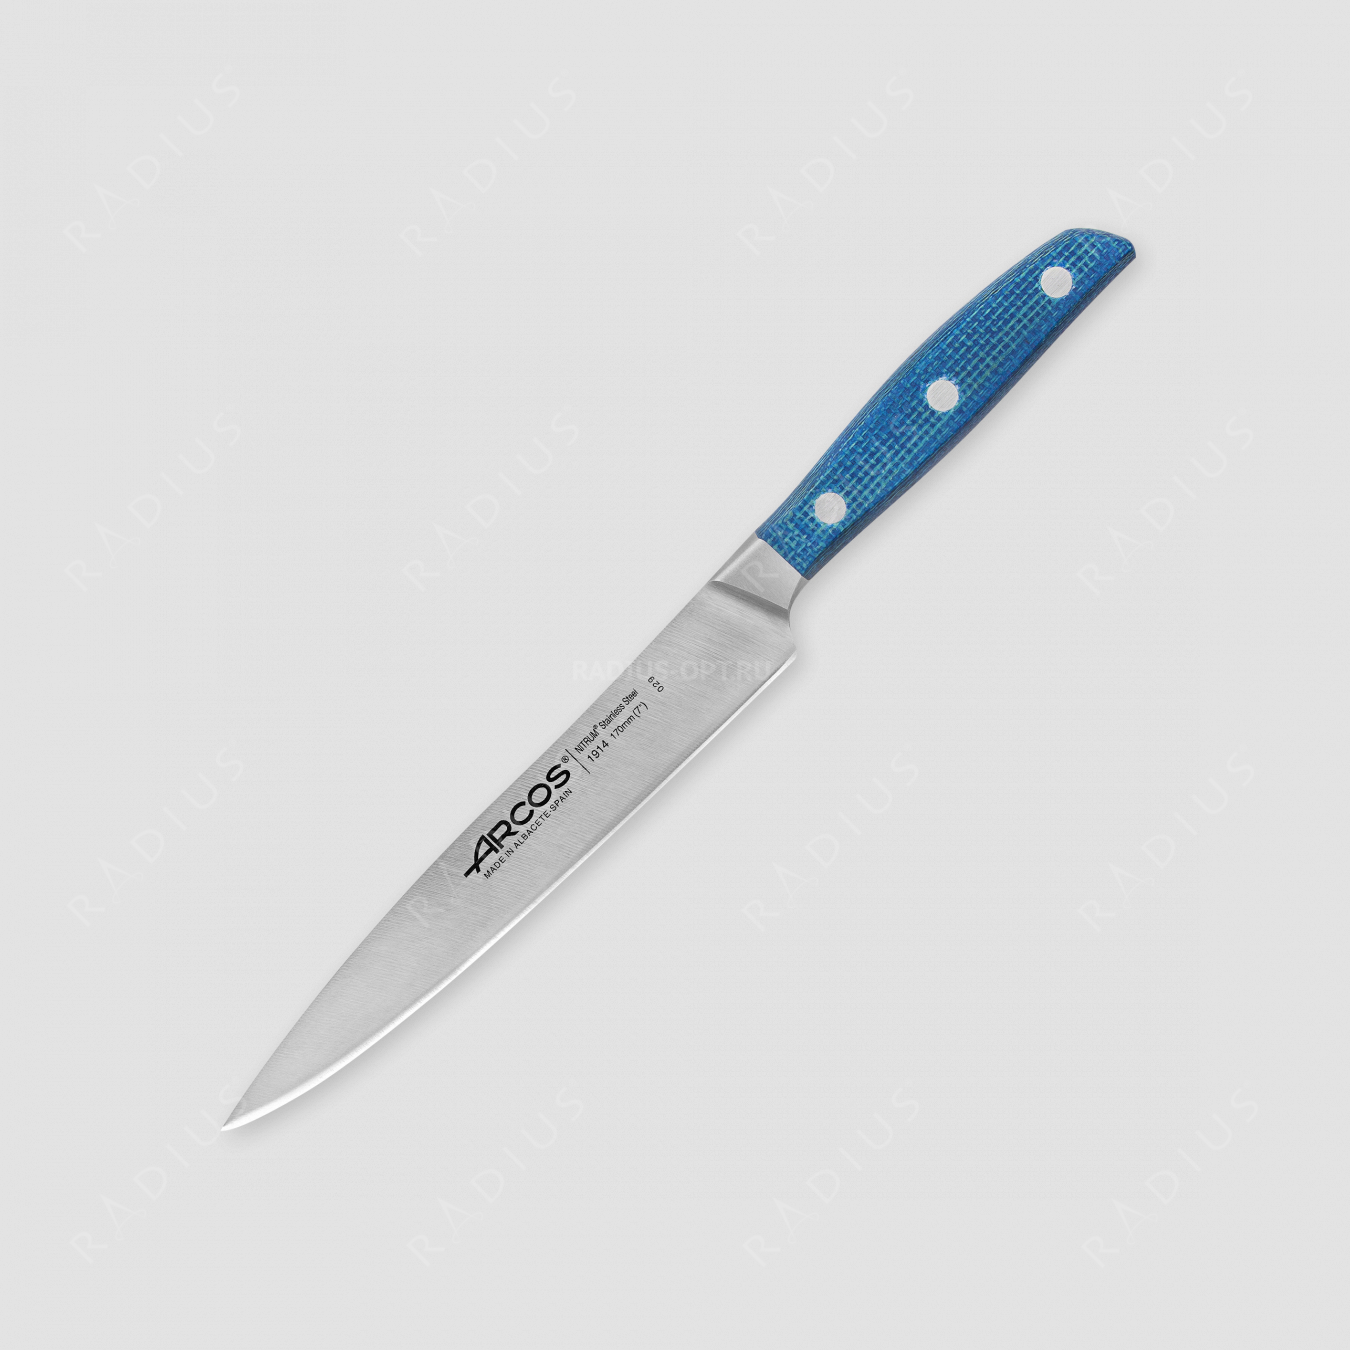 Нож кухонный для нарезки, гибкий 17 см, серия Brooklyn, ARCOS, Испания